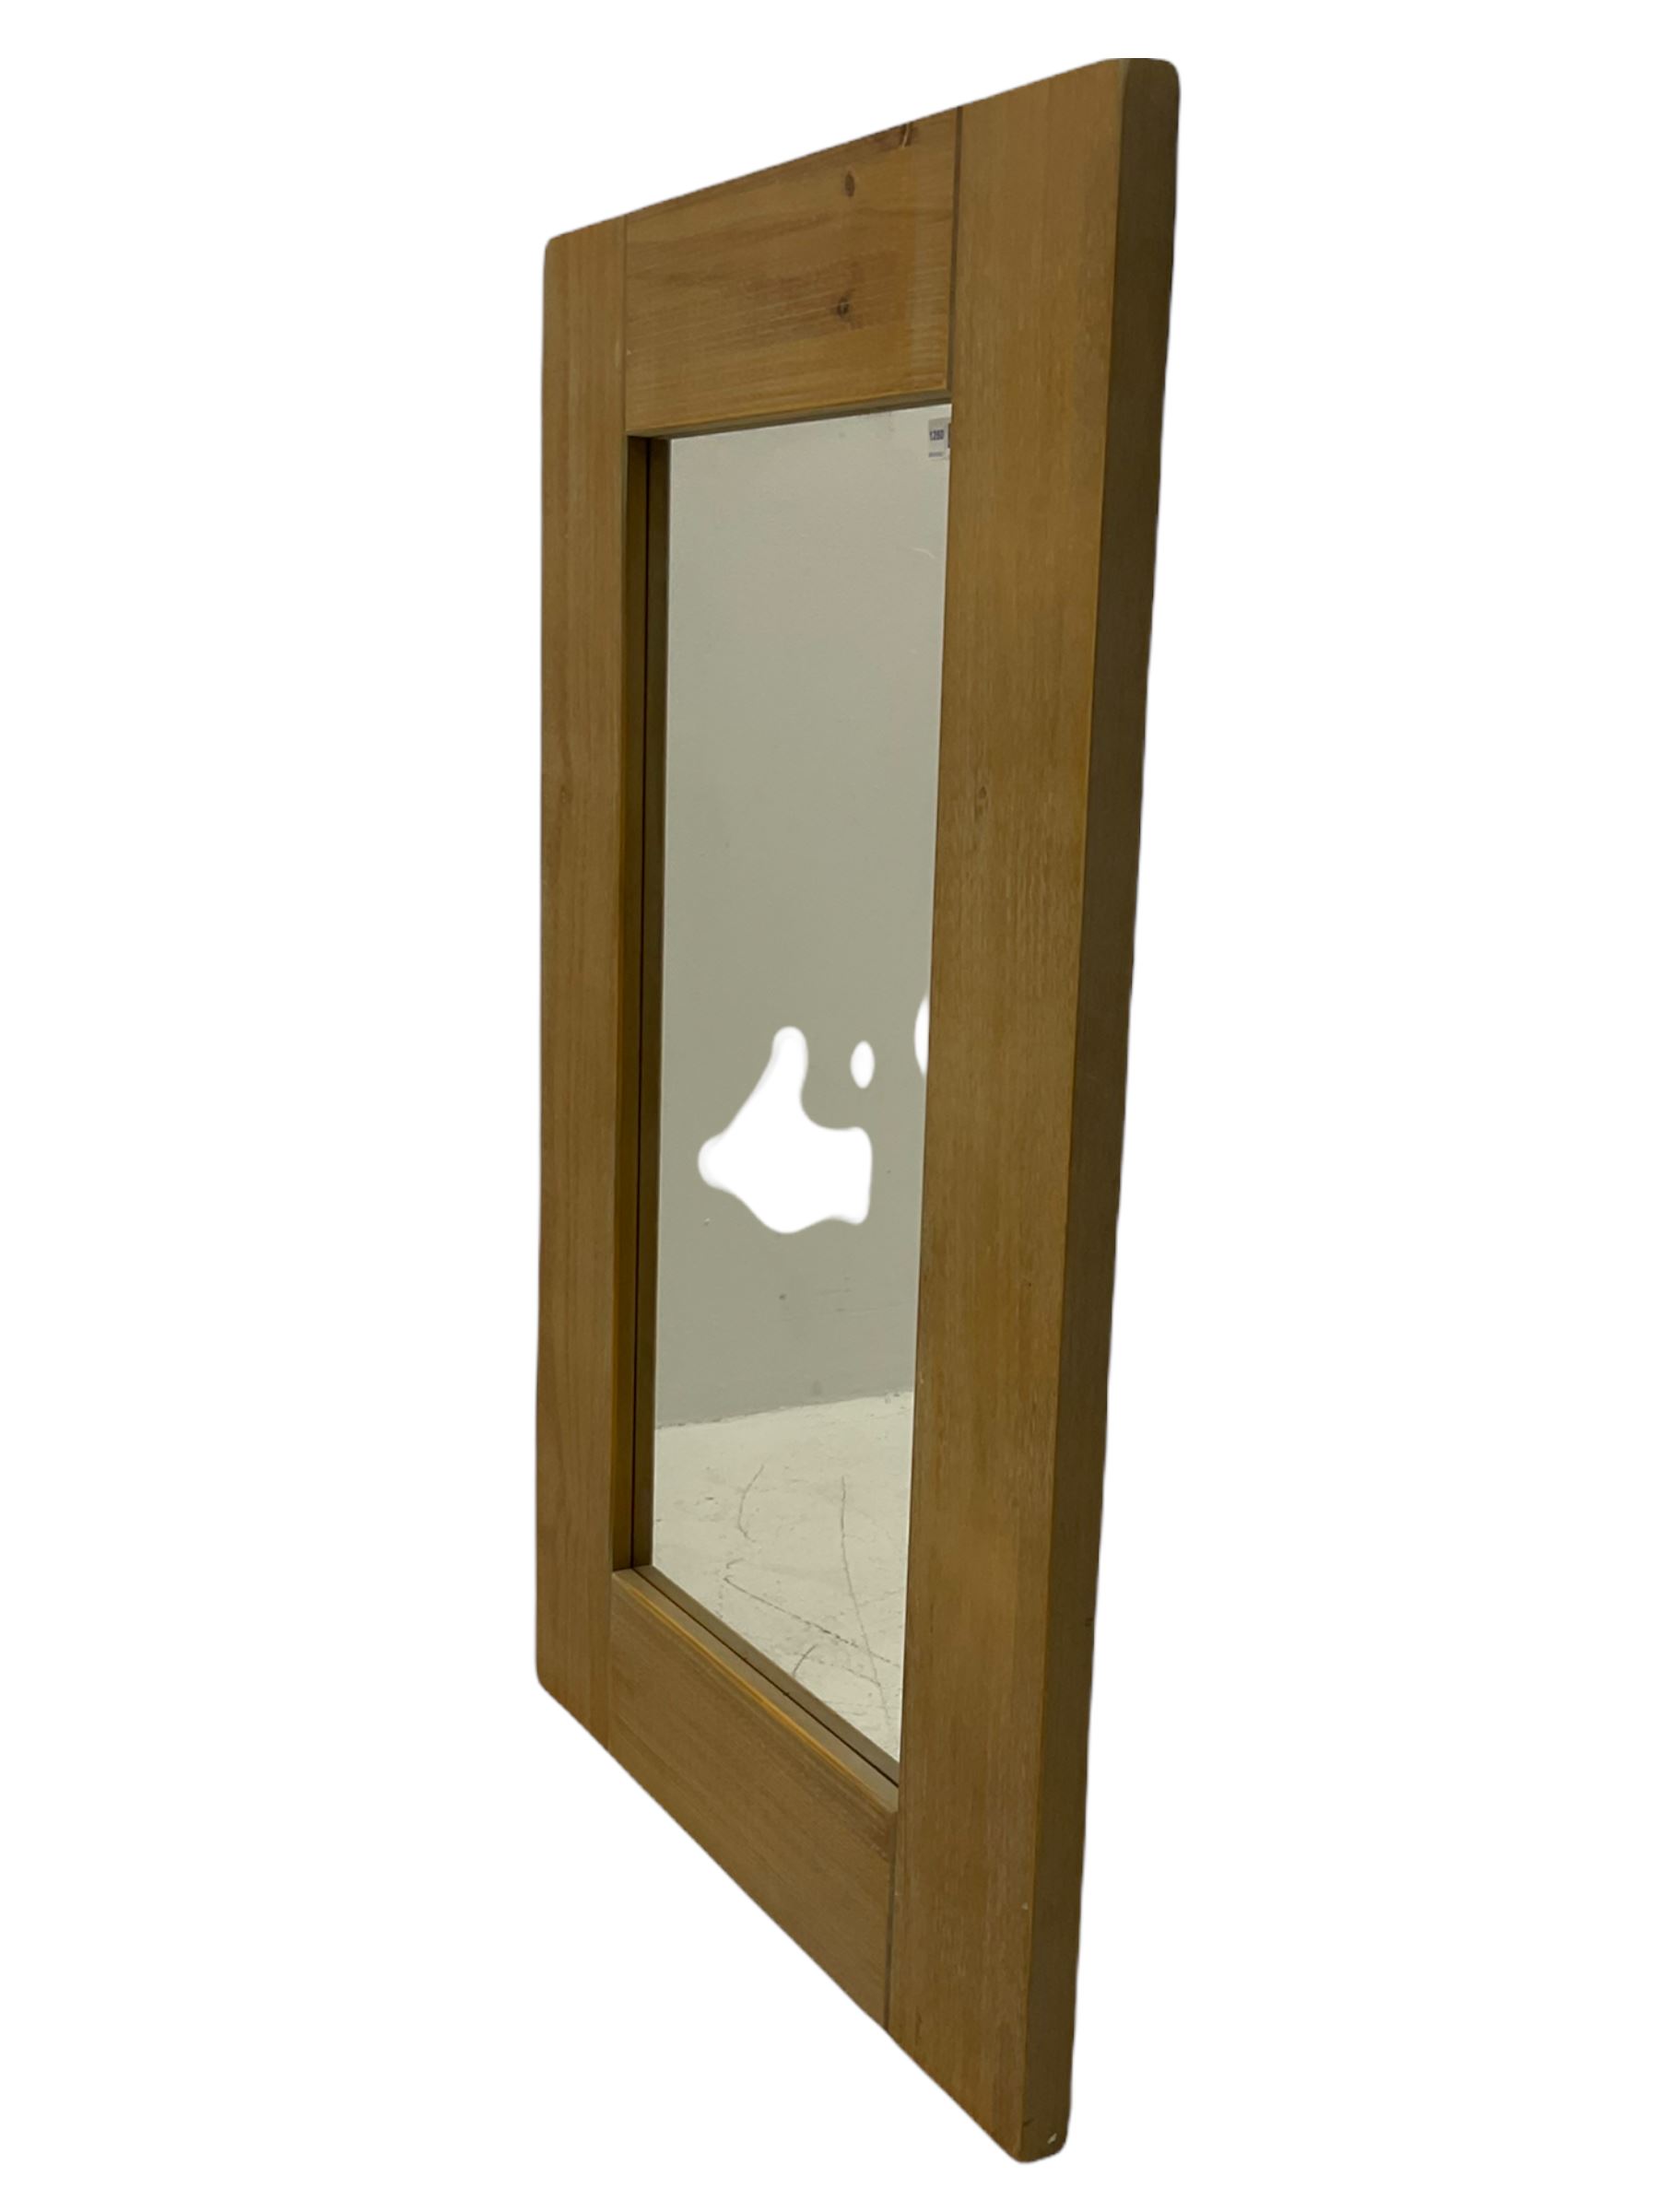 Light wood framed rectangular wall mirror - Image 4 of 4